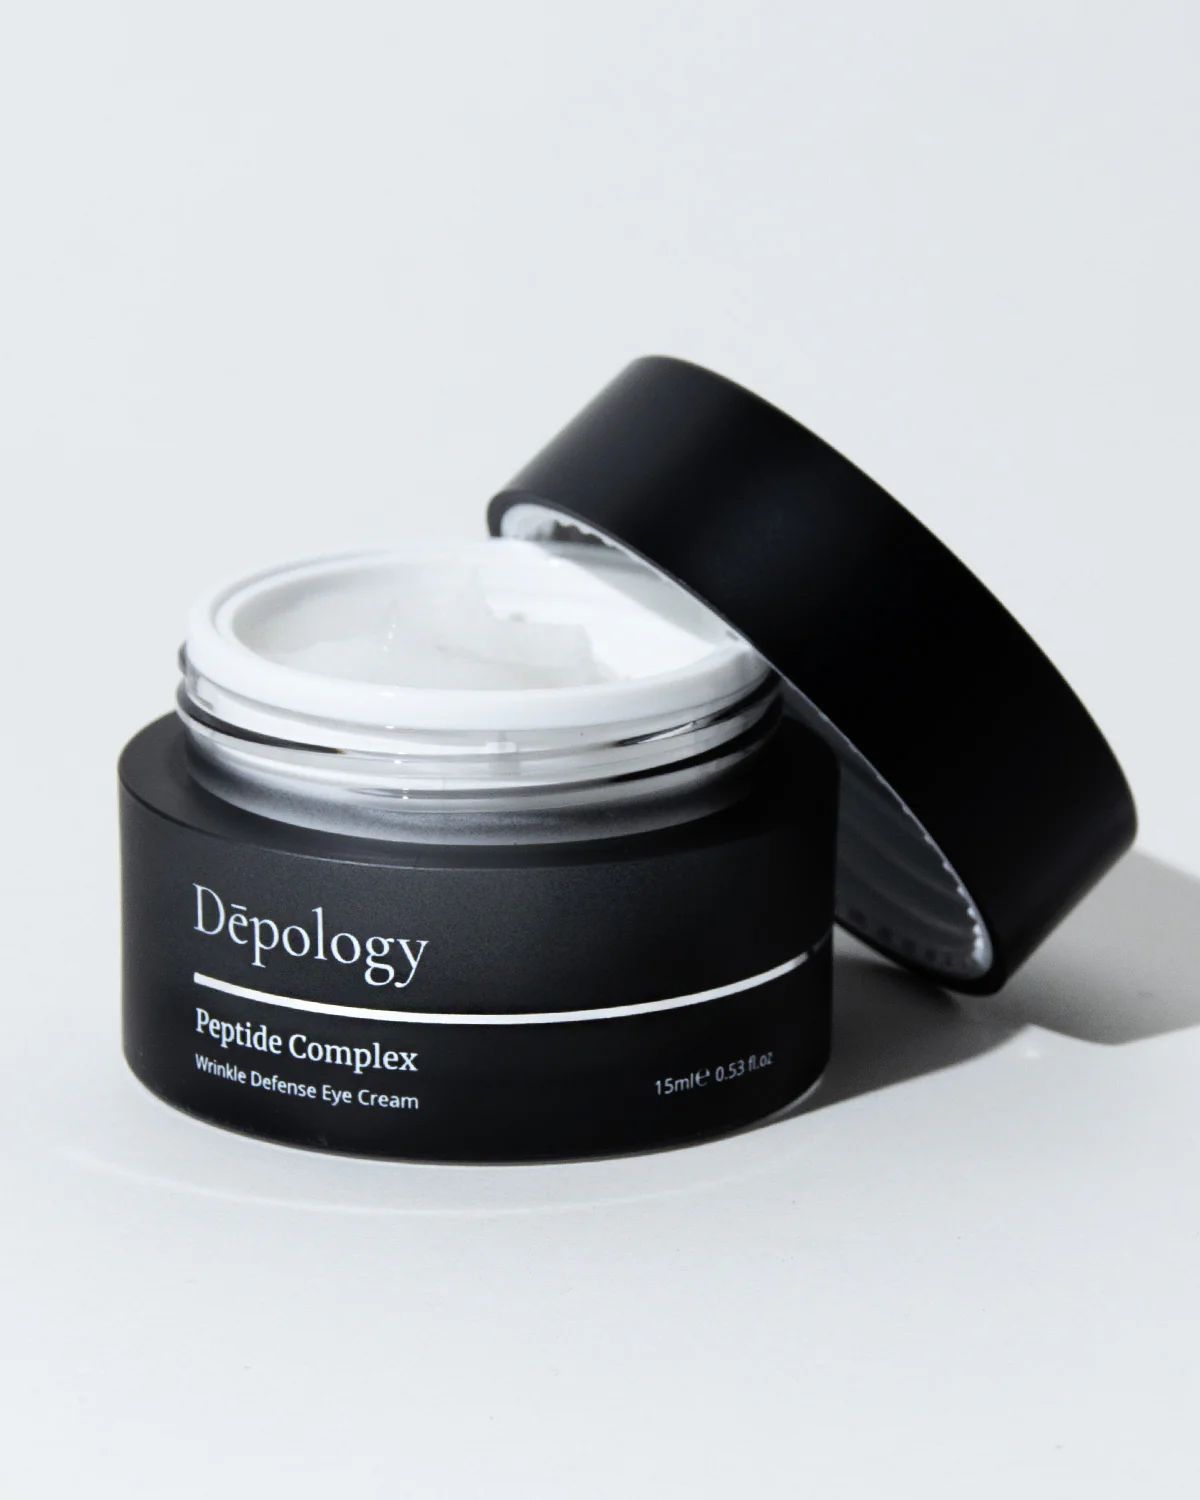 Peptide Complex Wrinkle Defense Eye Cream | Depology